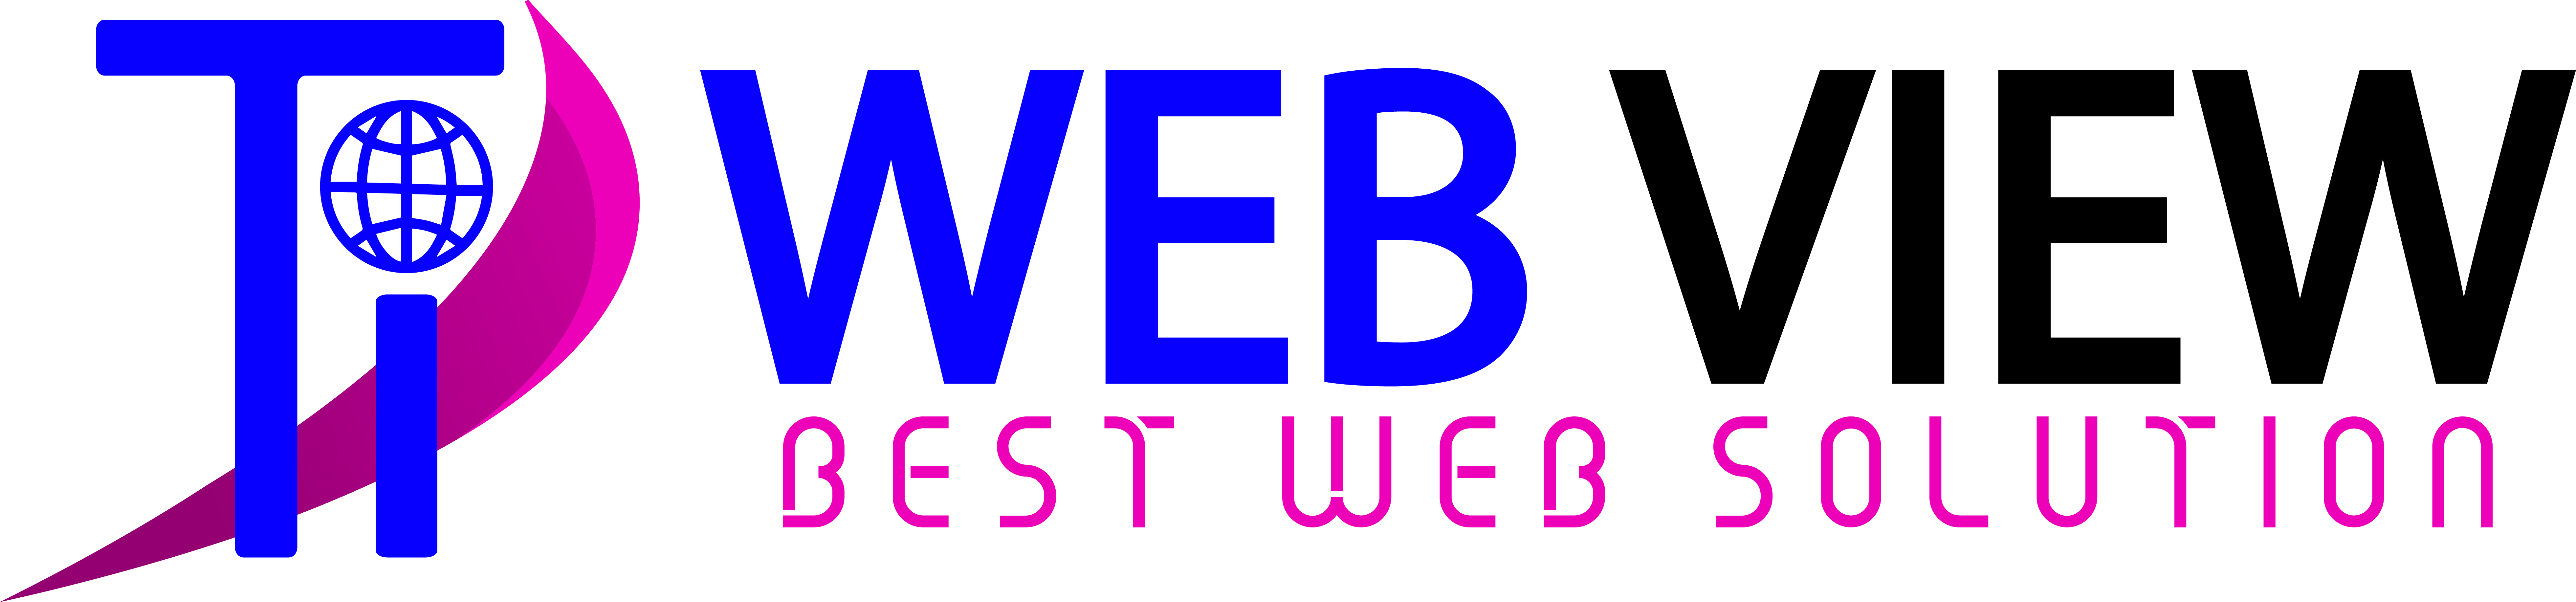 tiwebview logo